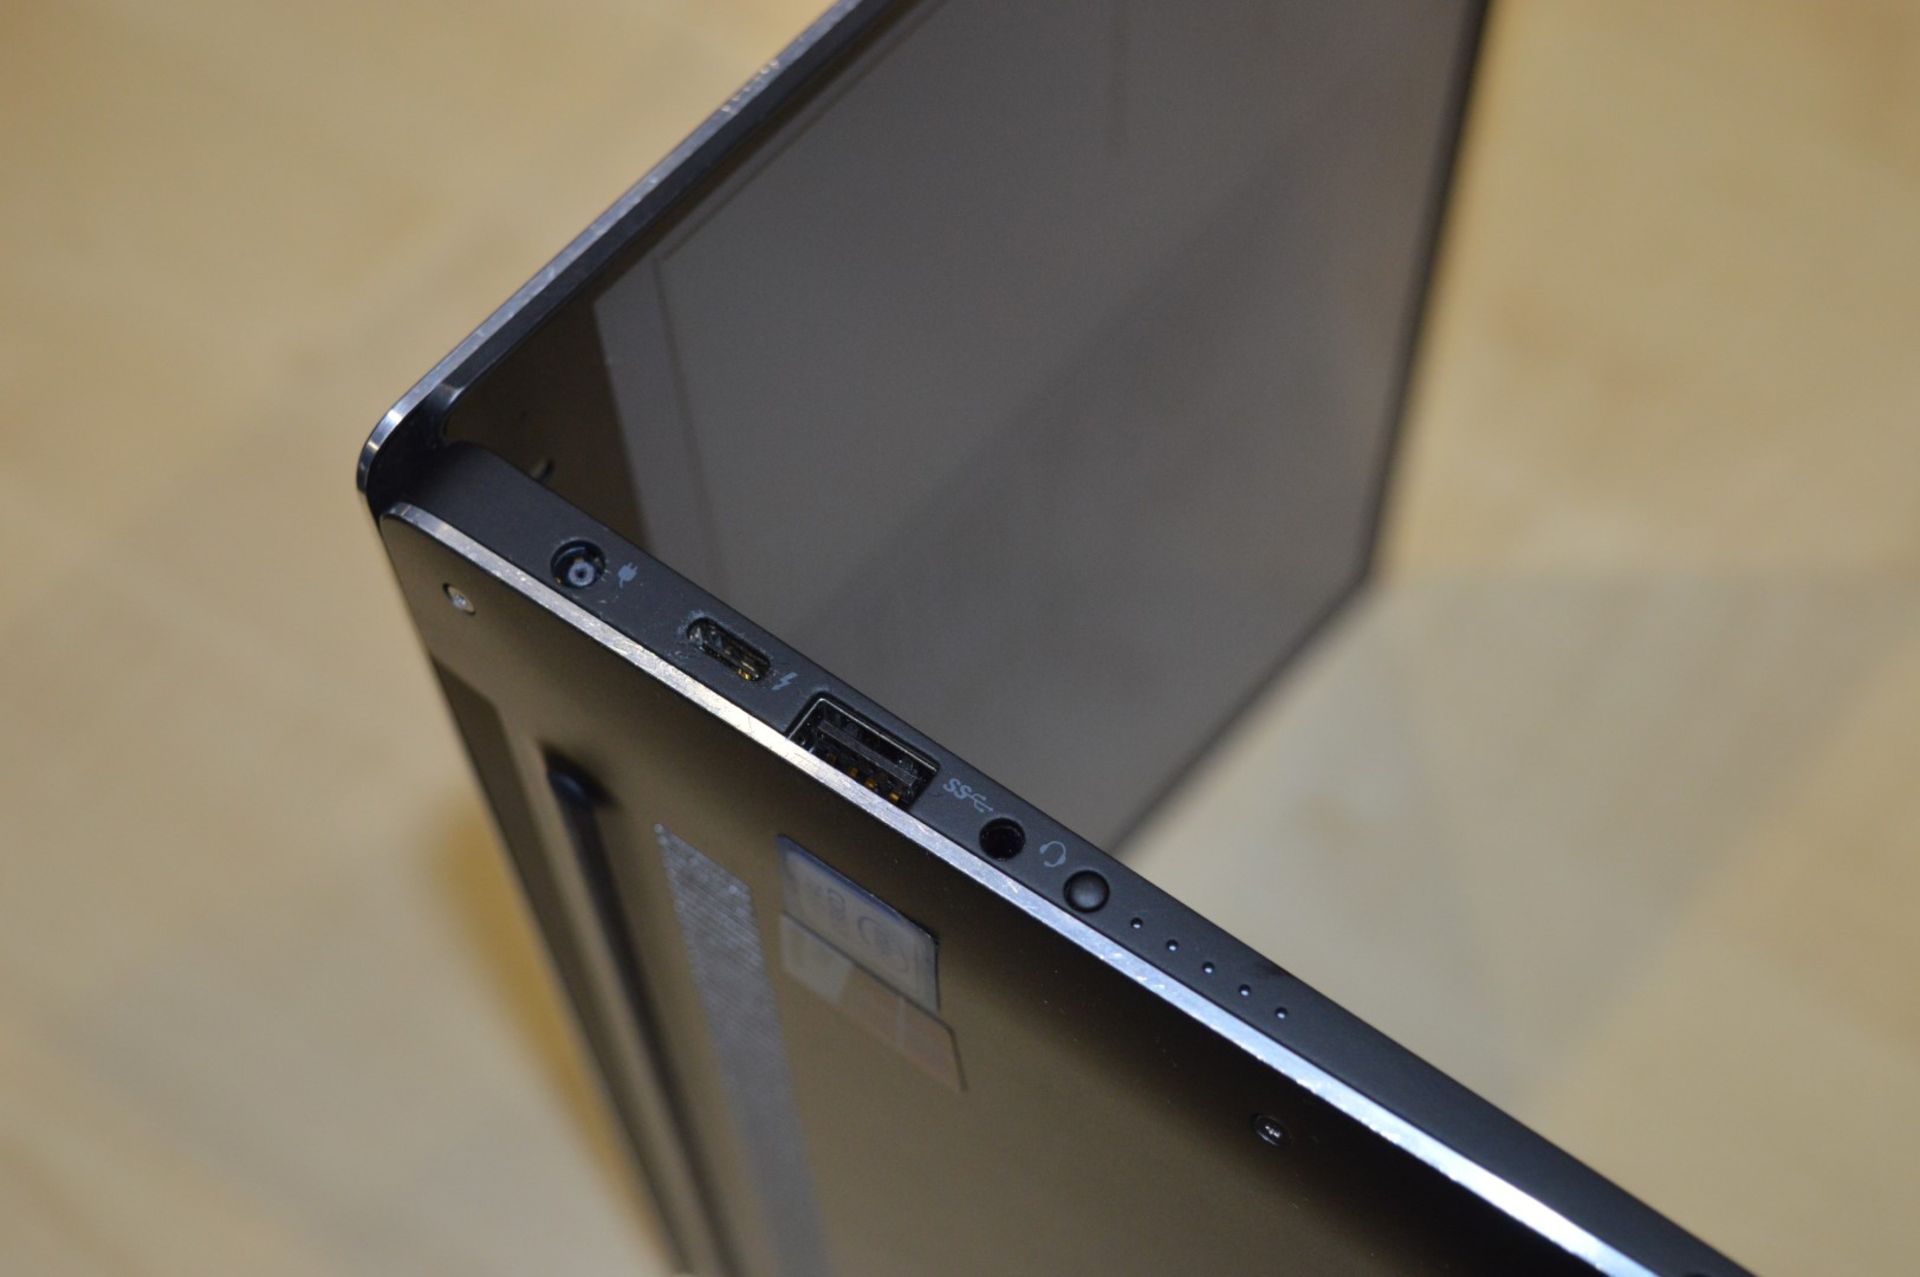 1 x Dell XPS 13 9360 13.3 Inch Ultrabook - Features Full HD Screen, Intel Core i5-7200U 7th Gen 2. - Image 12 of 16